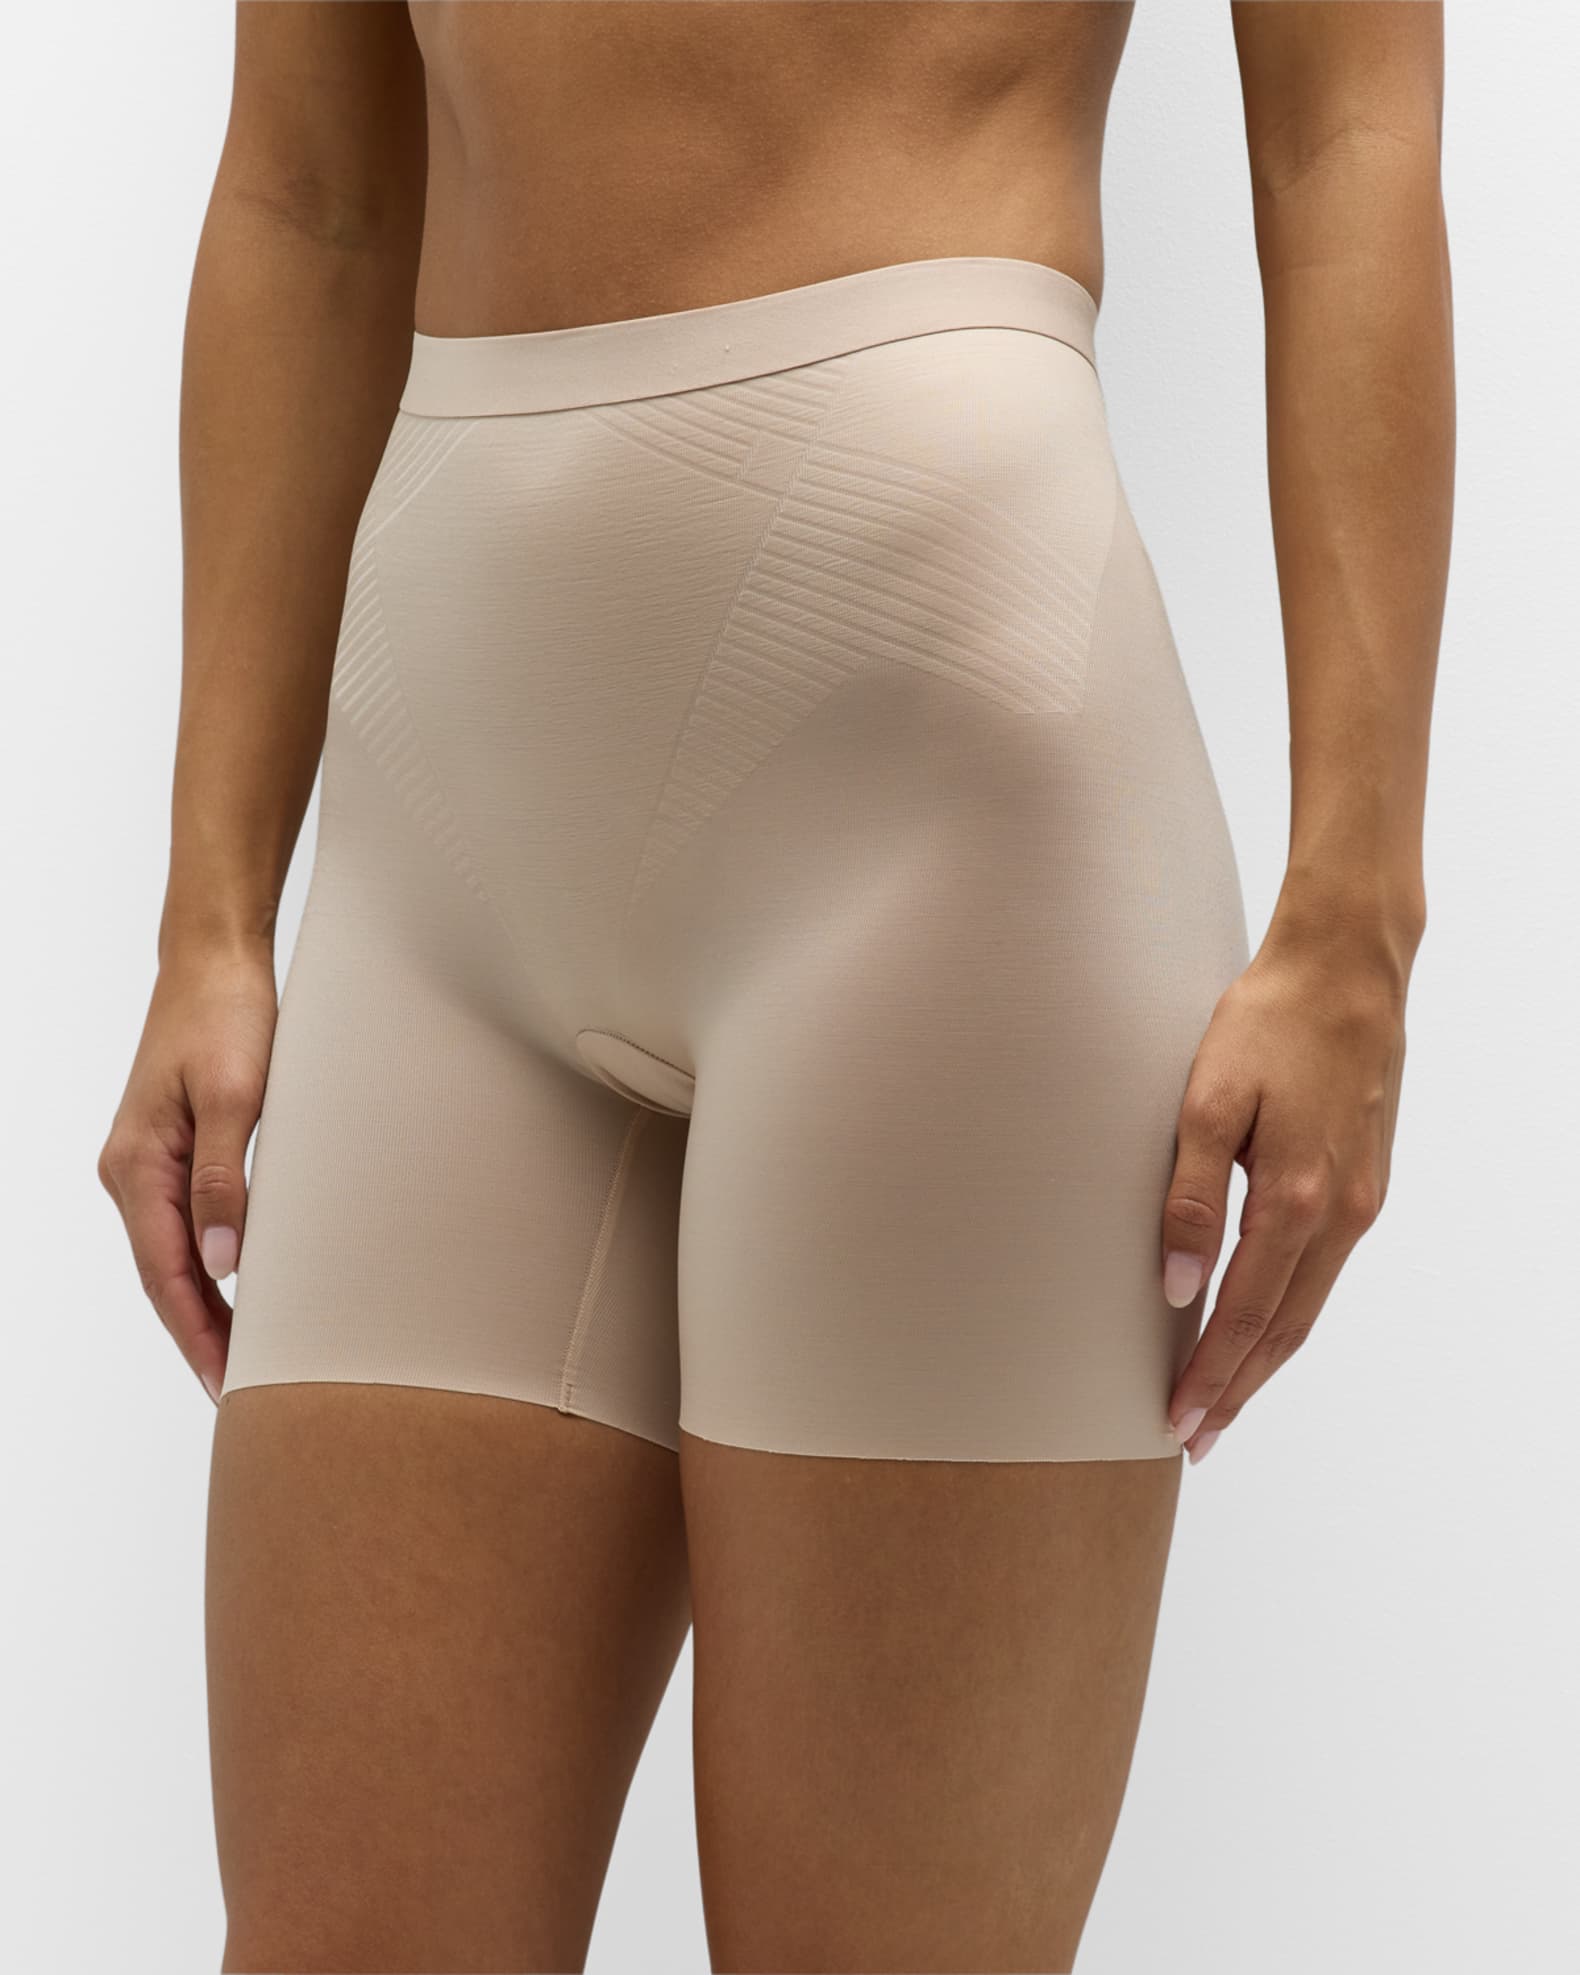 Thinstincts 2.0 shorts